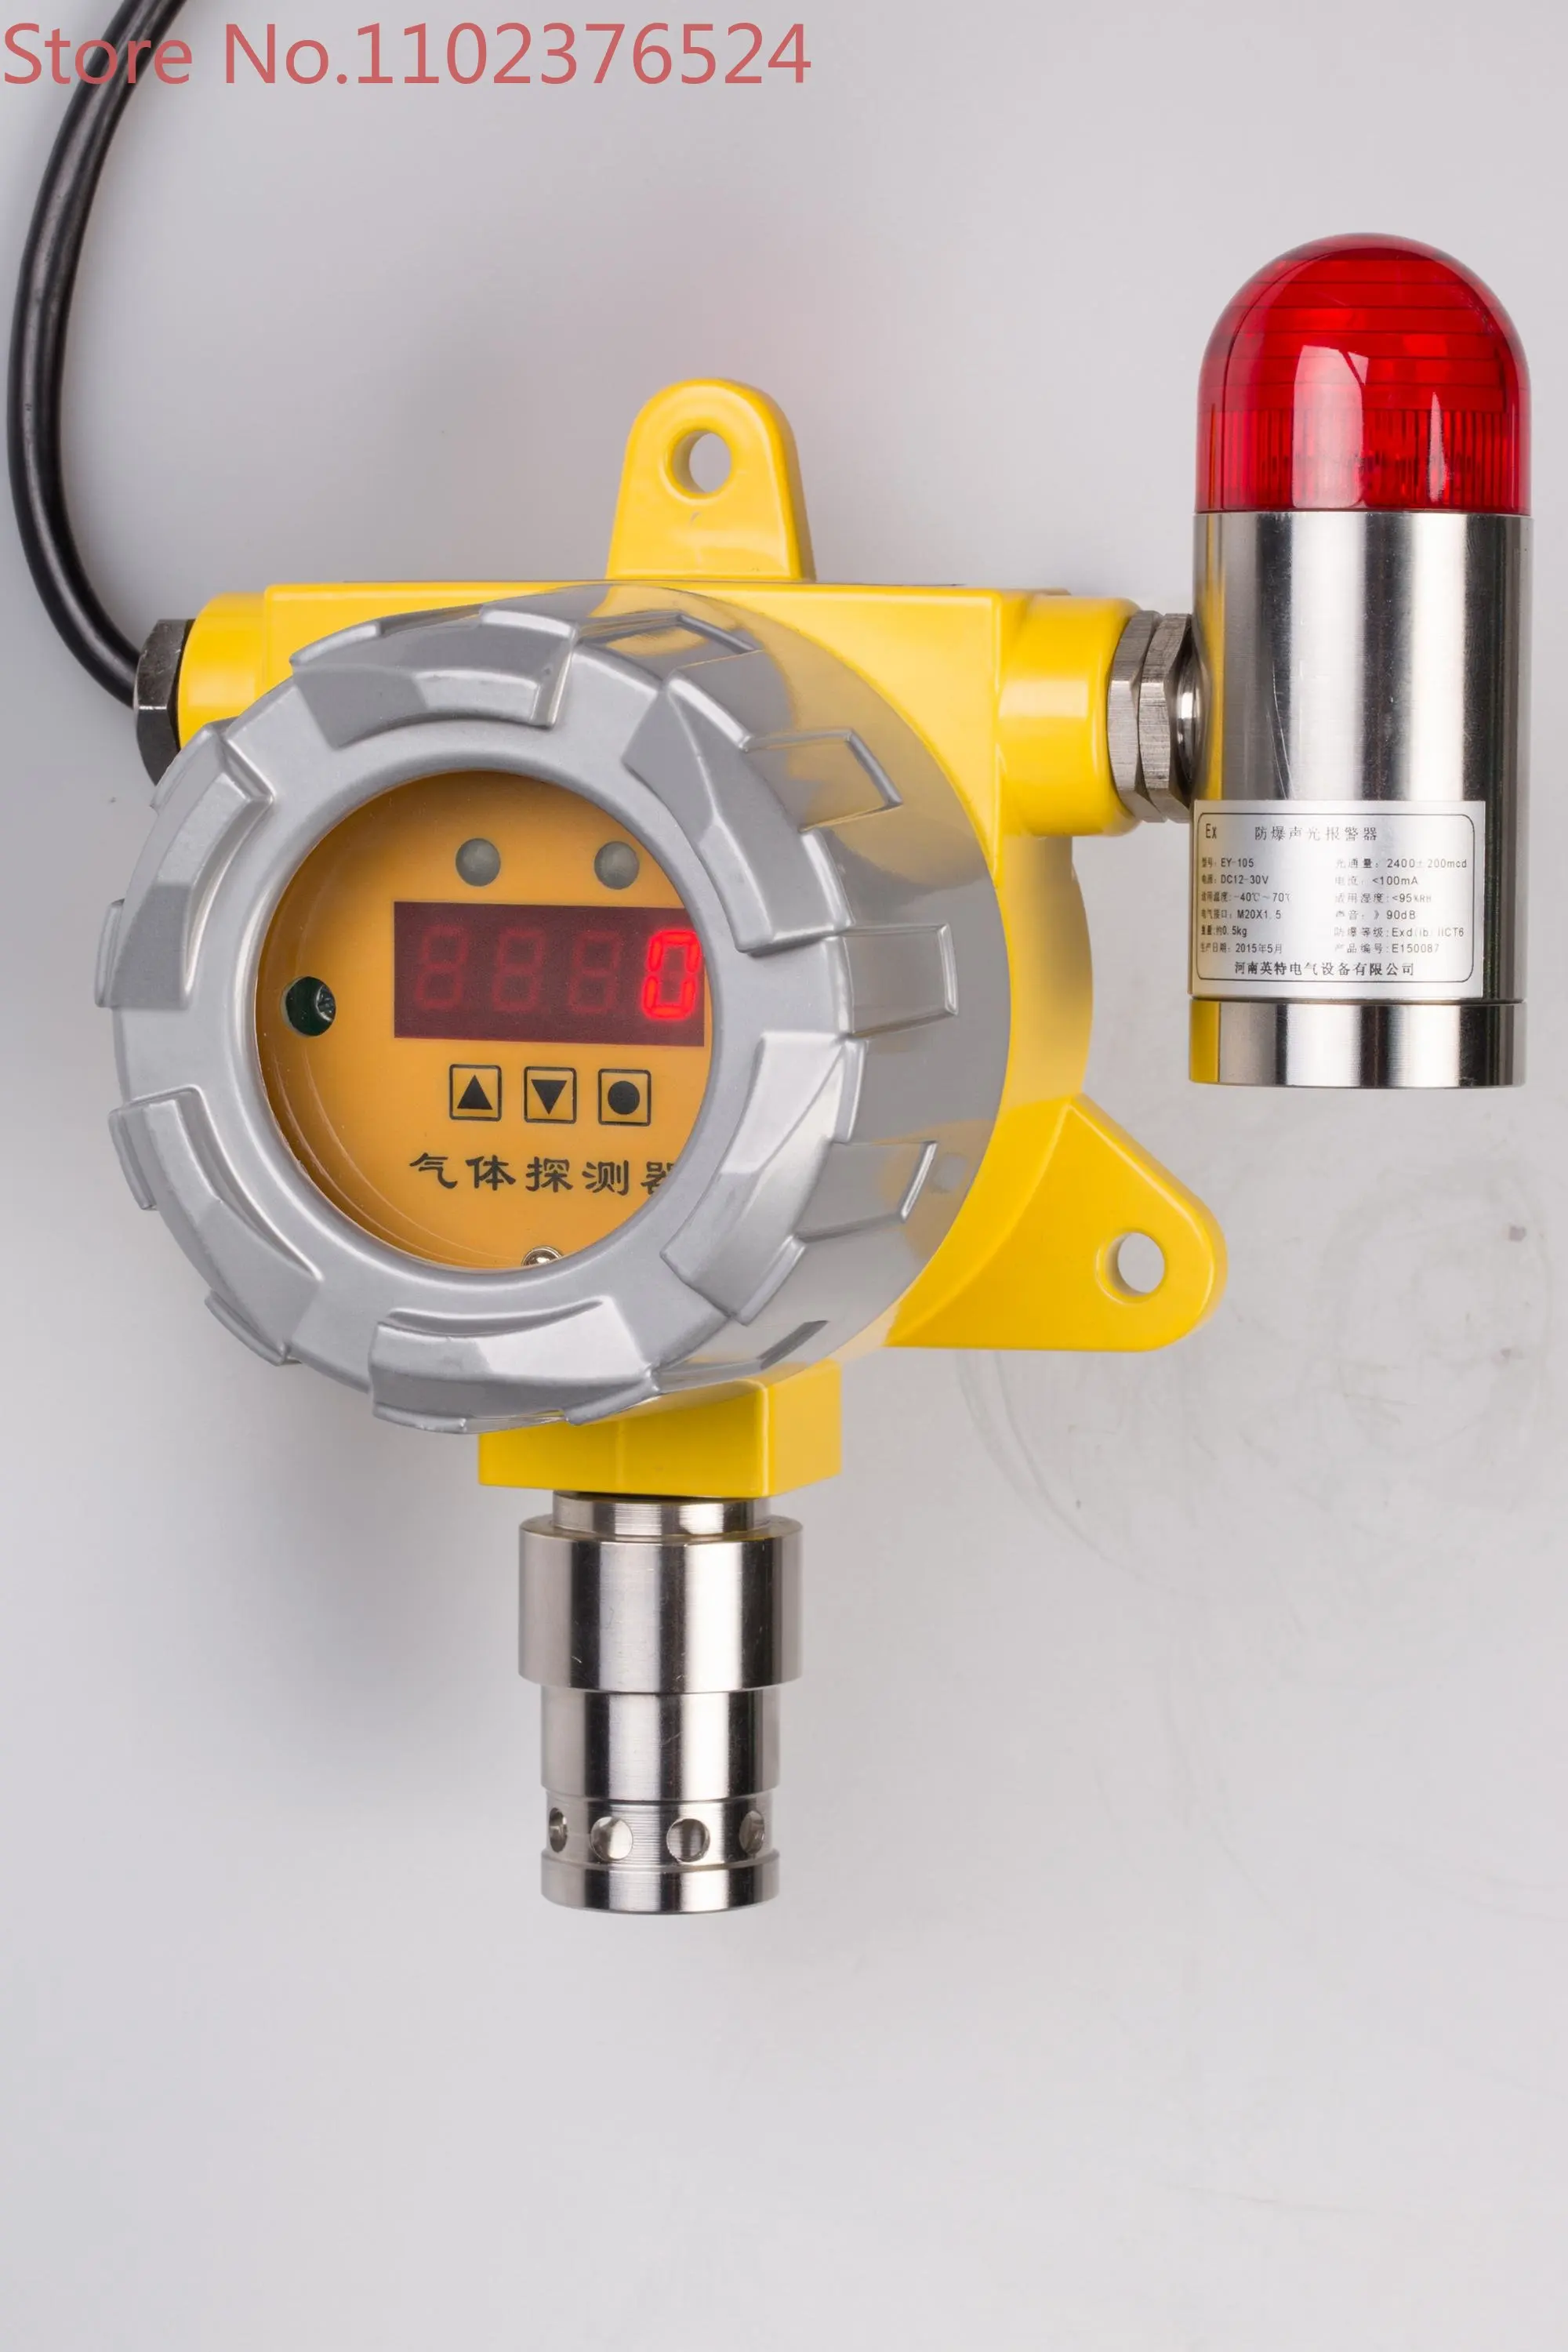 

Hot sale fixed gas leak detector ETO detector online detection gas sterilization